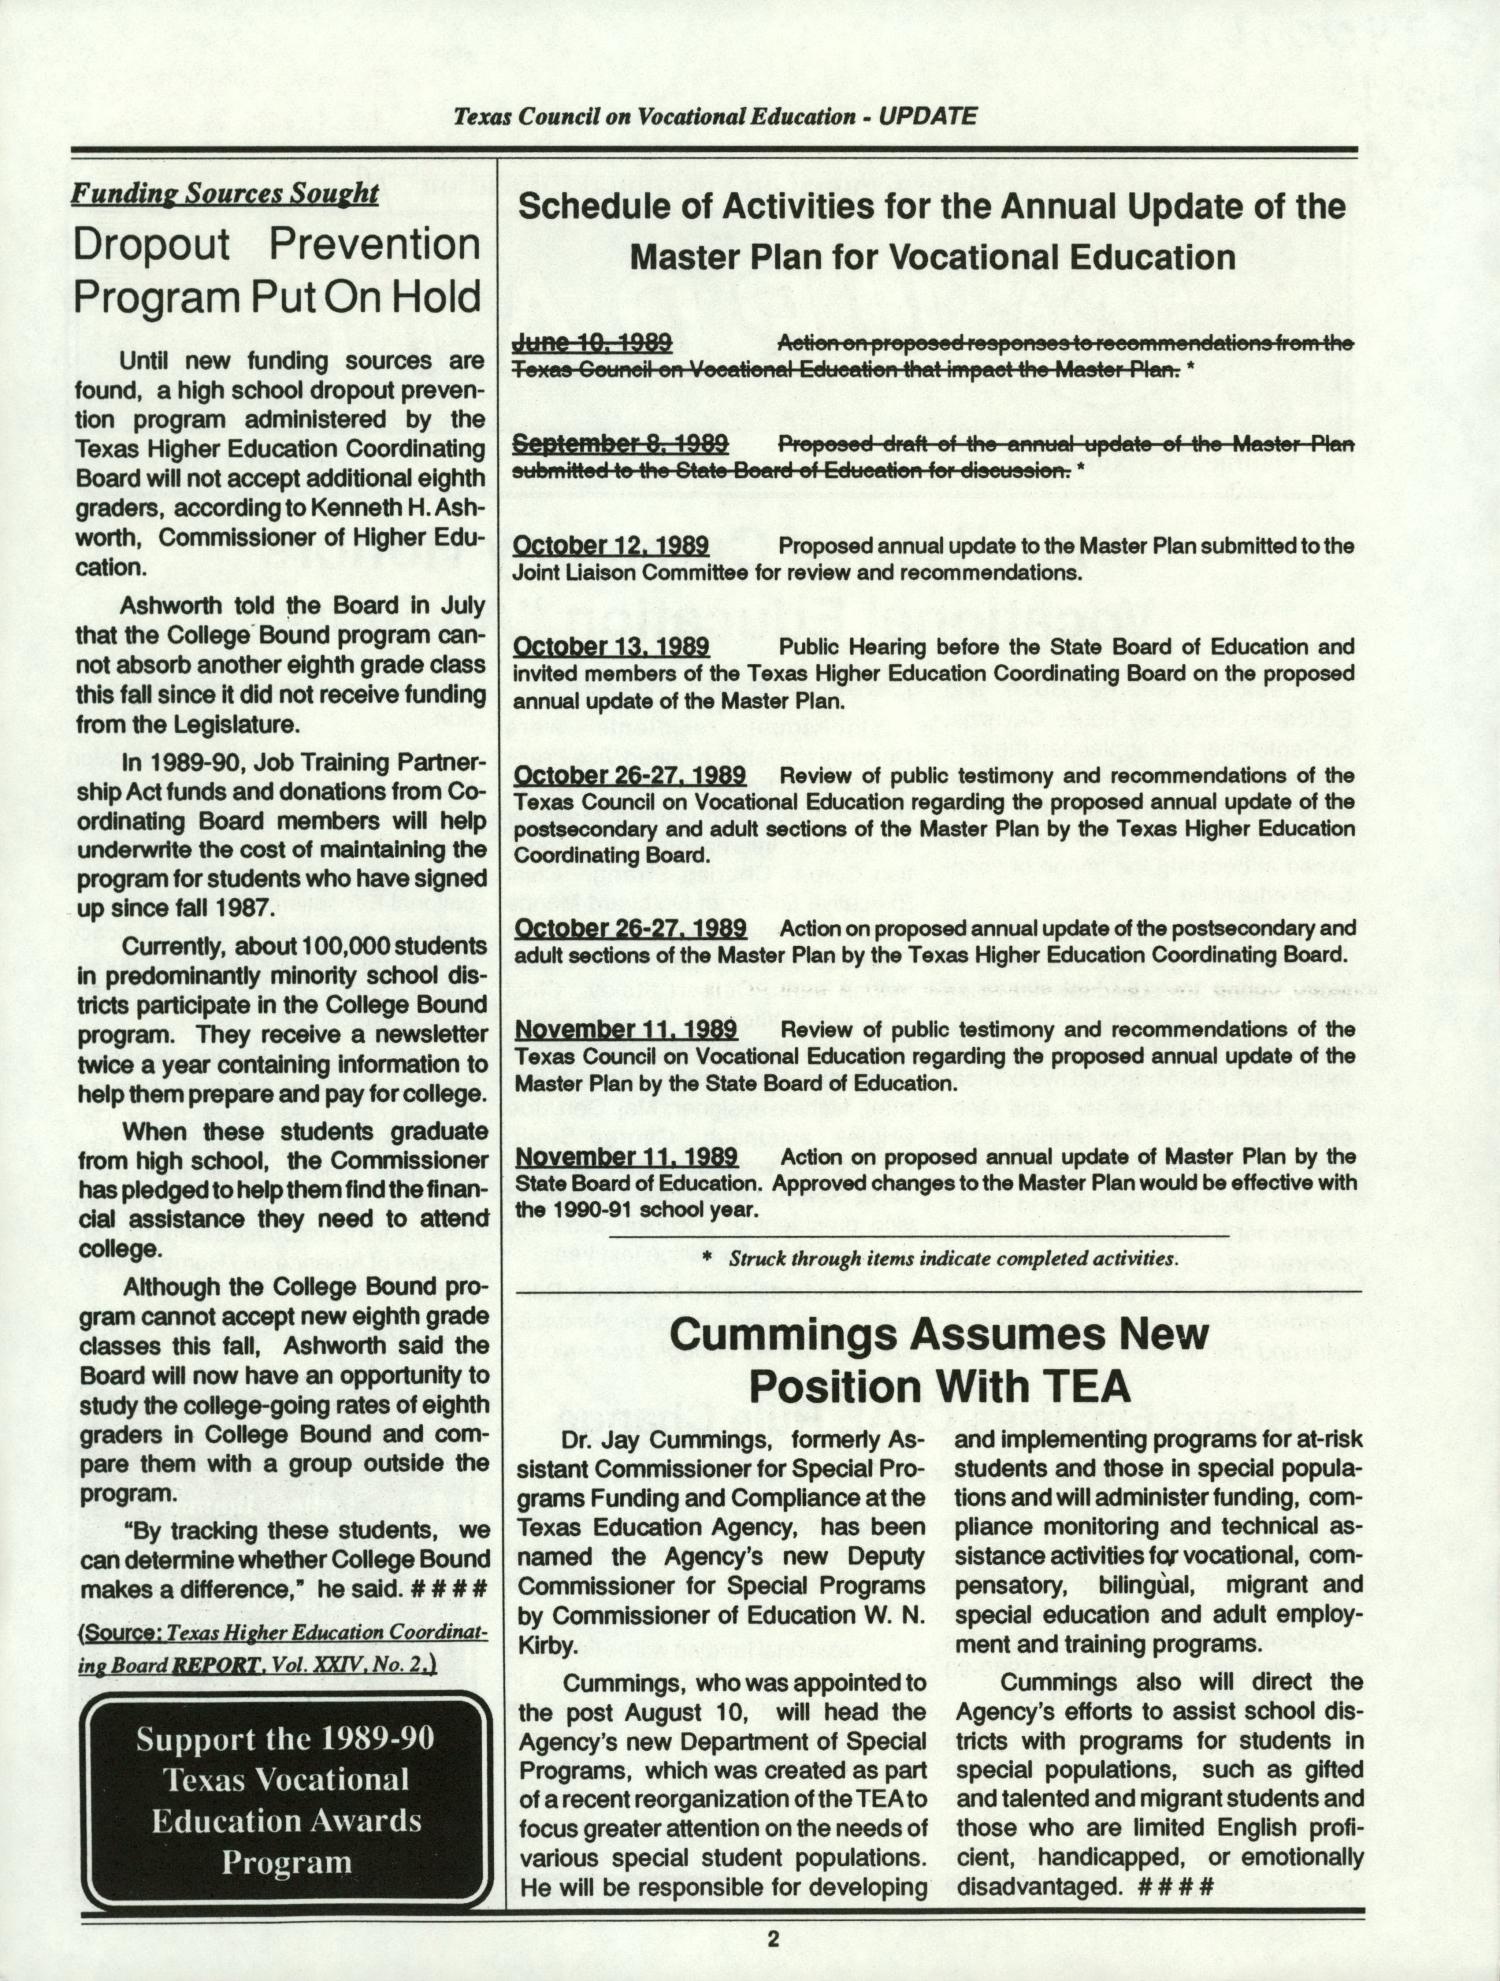 Update, Volume 20, Number 4, October 1989
                                                
                                                    2
                                                